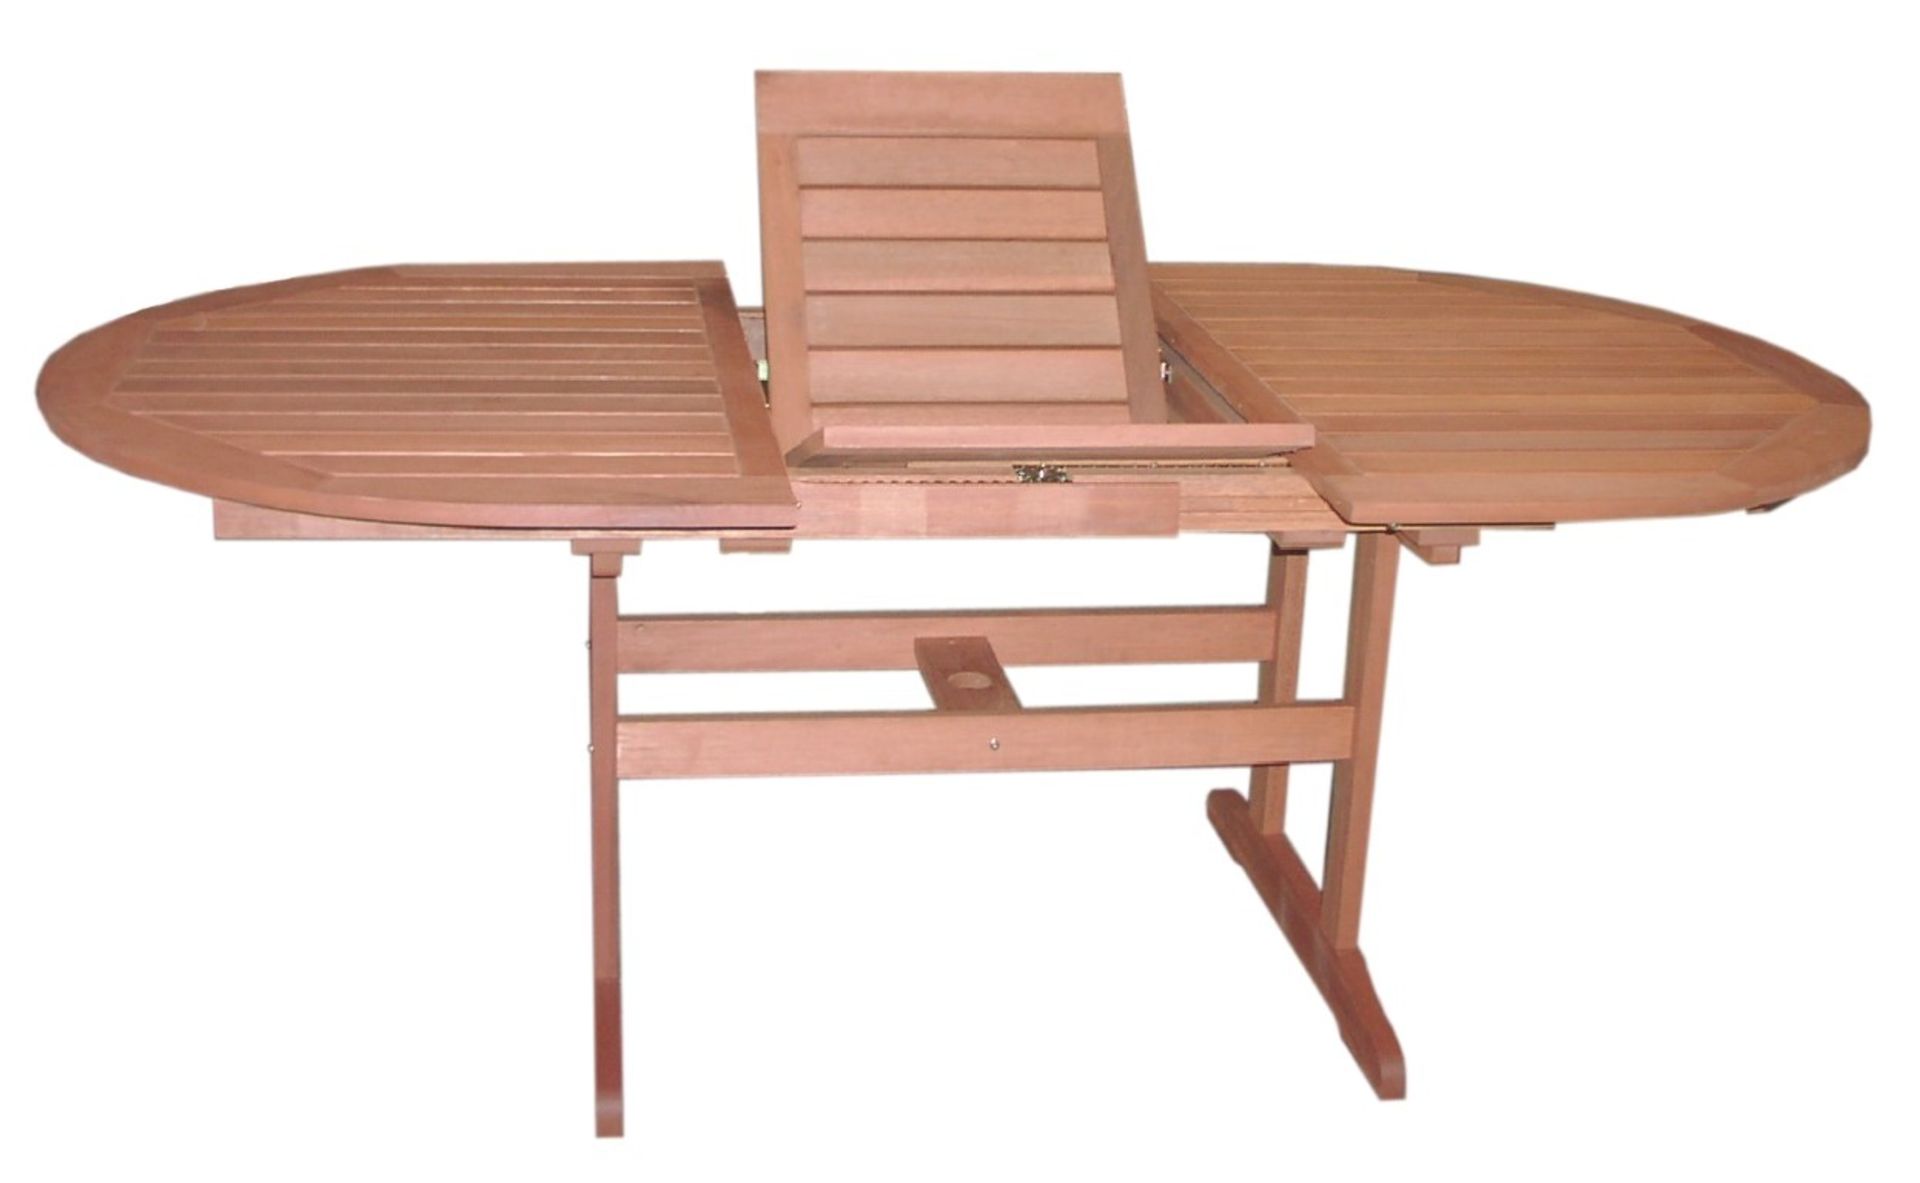 1 x 5-Piece "Macau Nassau" Garden Furniture Set - Includes Bench, Extending Table & 3 x Arm Chairs - - Image 3 of 9